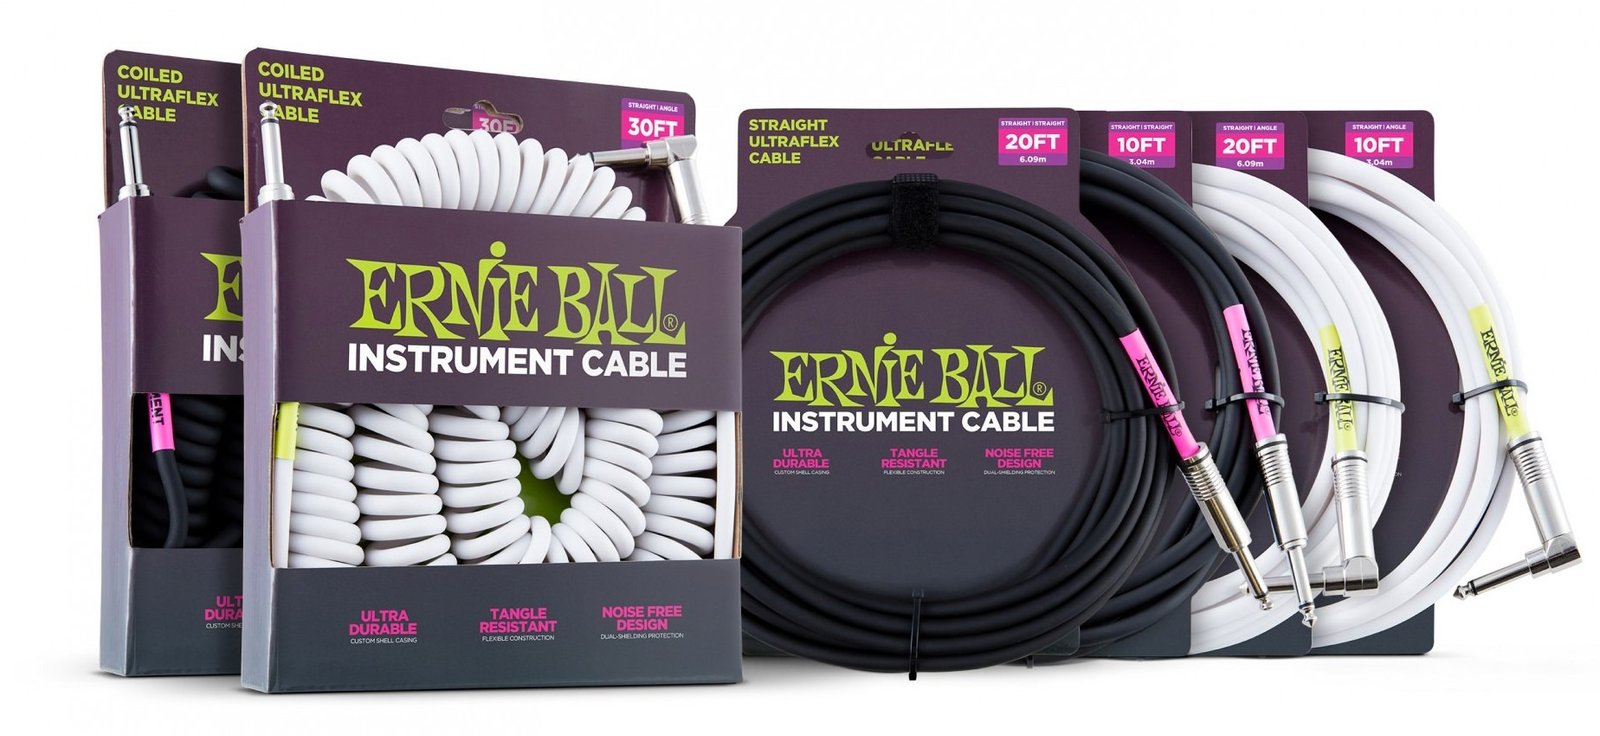 Ernie Ball Accessories ultraflex cables packaging design